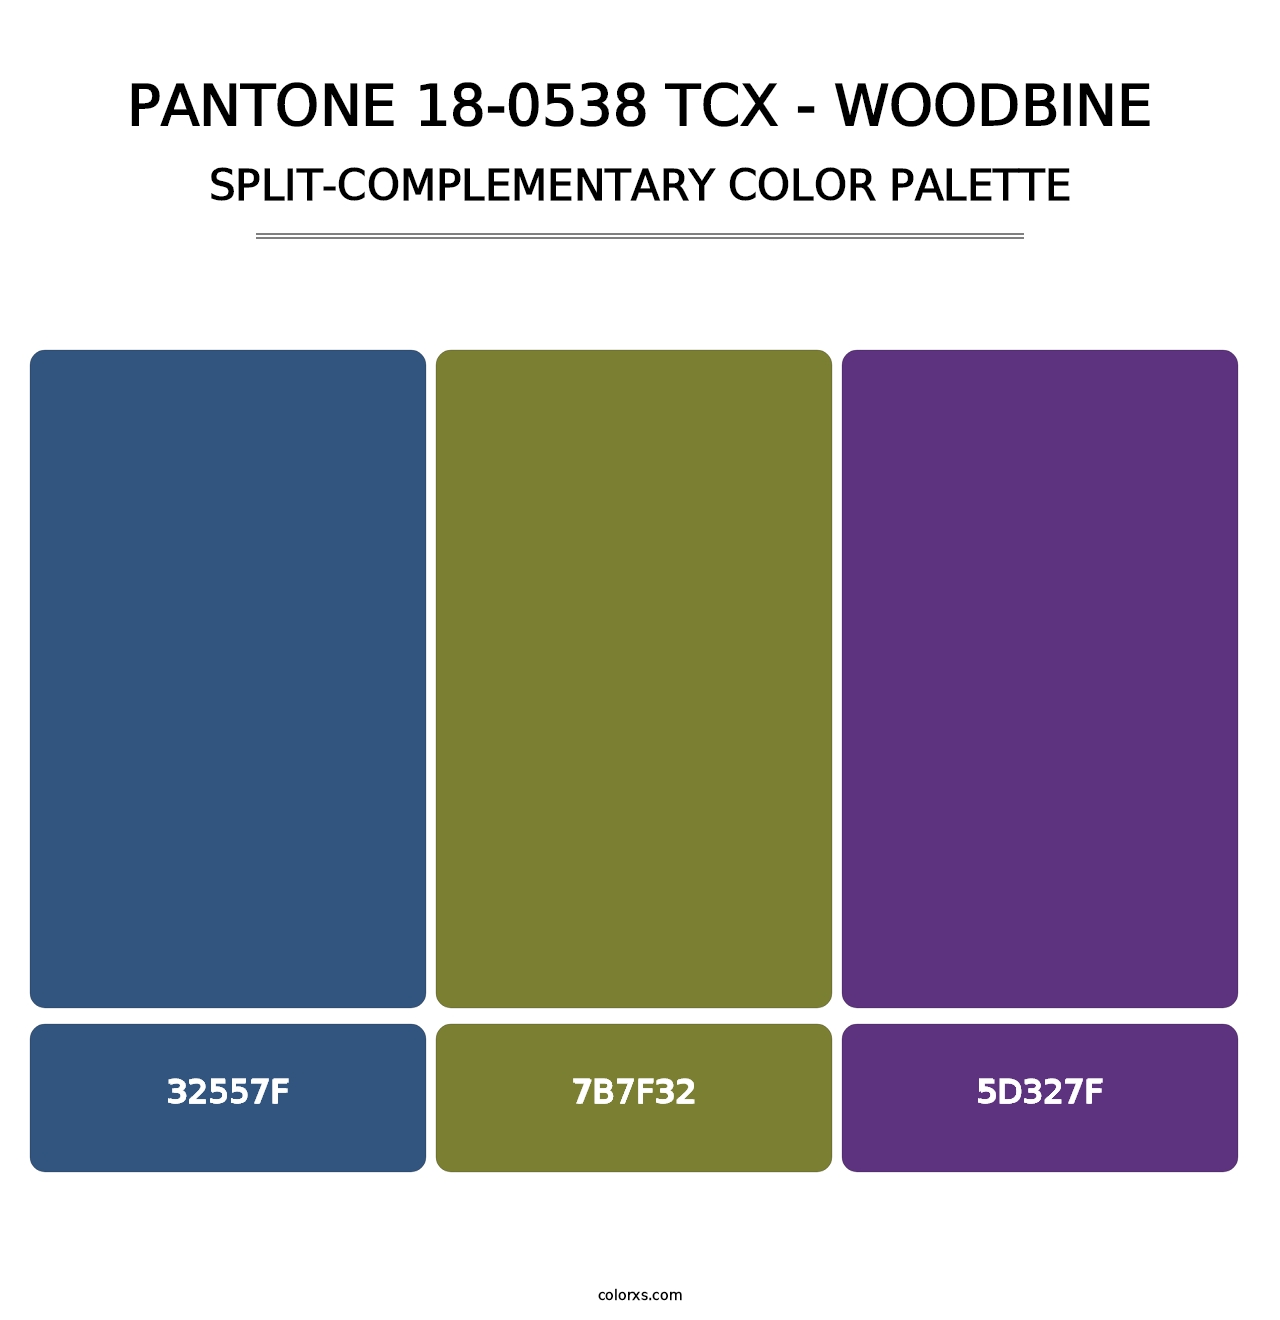 PANTONE 18-0538 TCX - Woodbine - Split-Complementary Color Palette